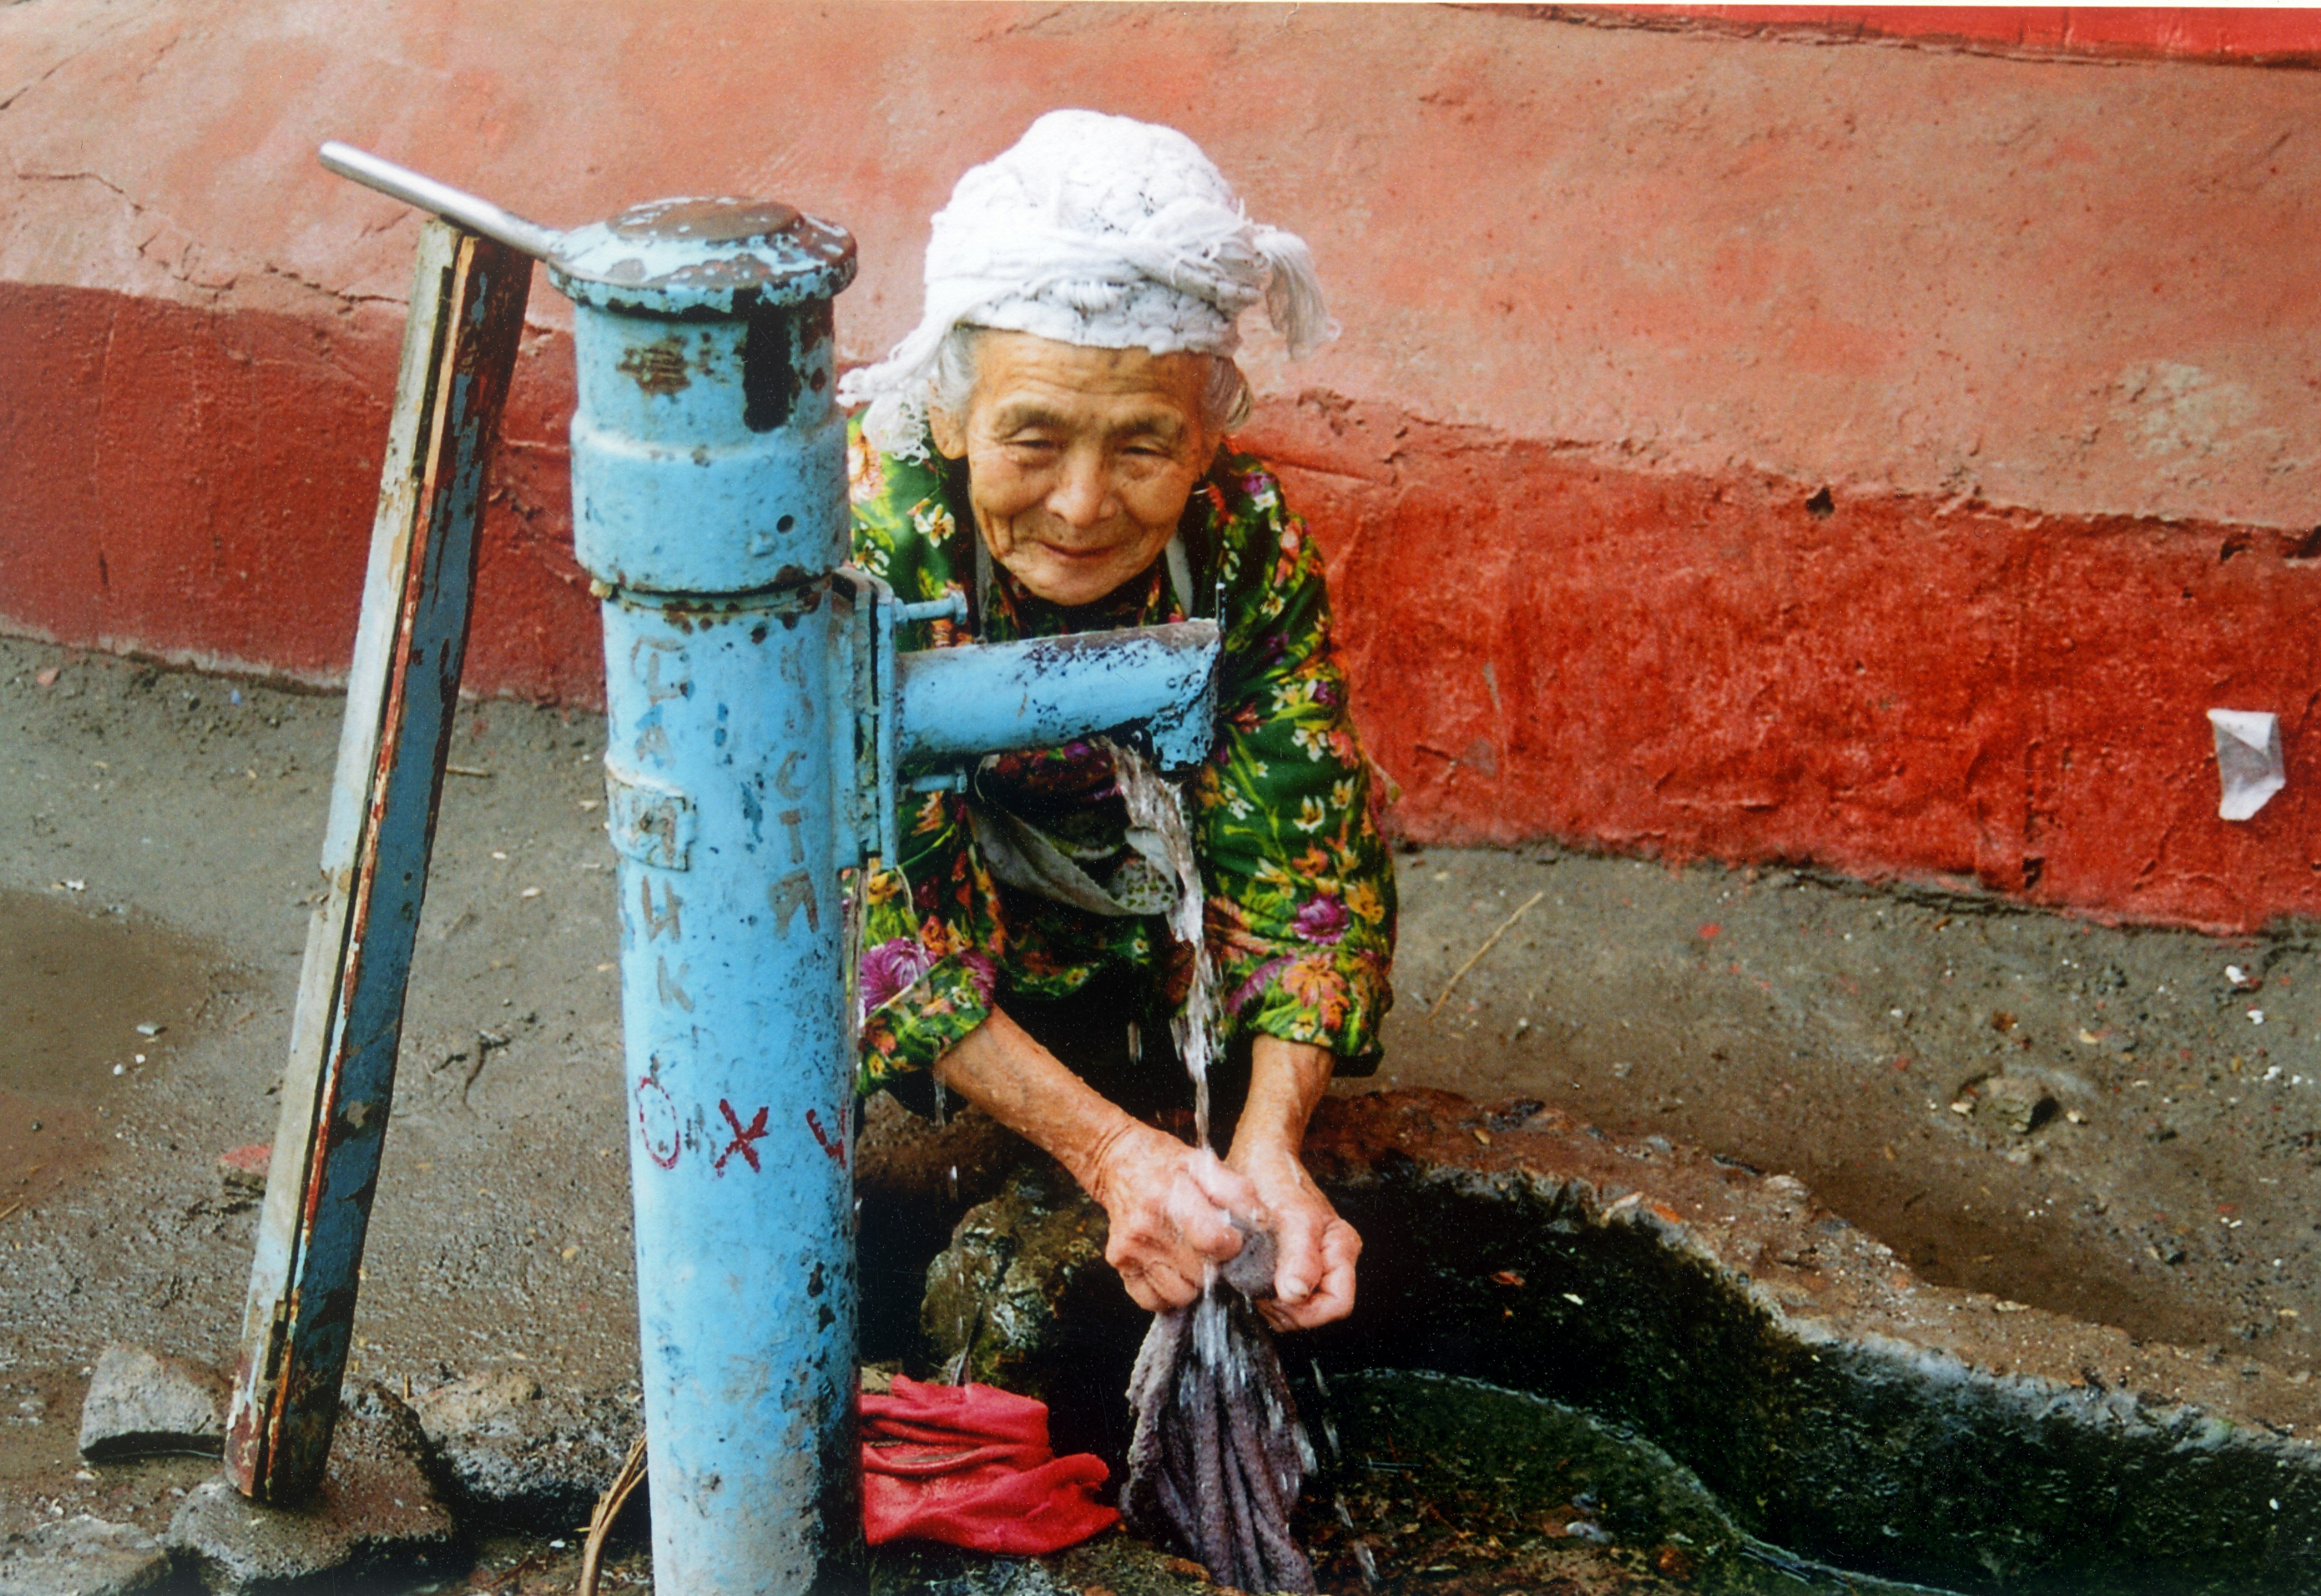 An elderly woman washing her hands under a blue tap.